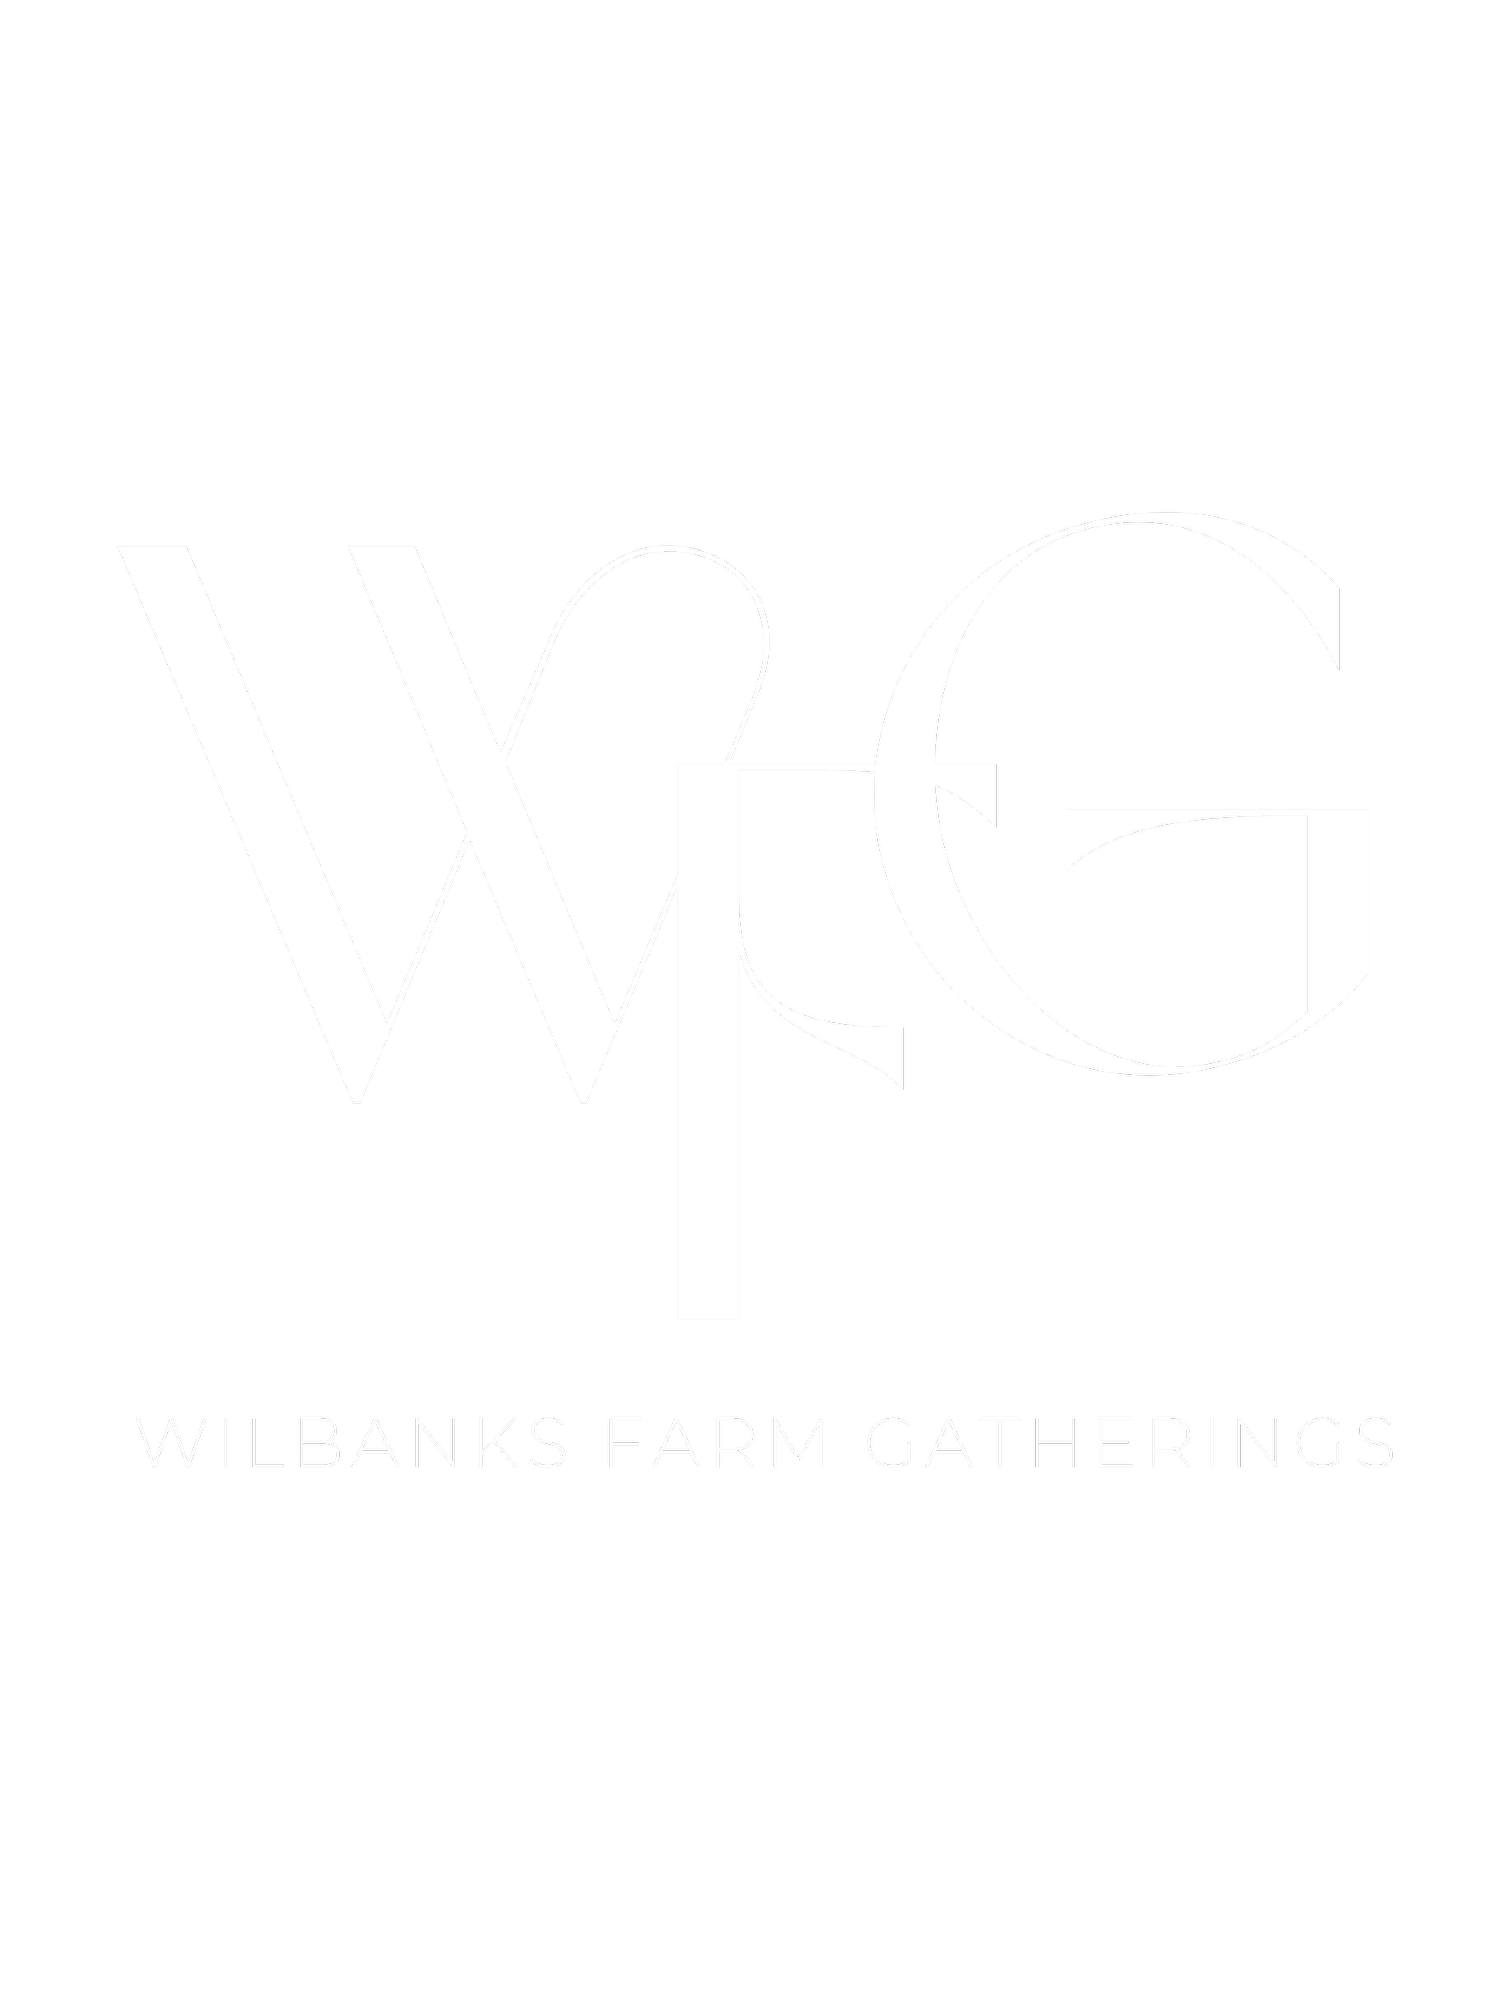 Wilbanks Farm Gatherings